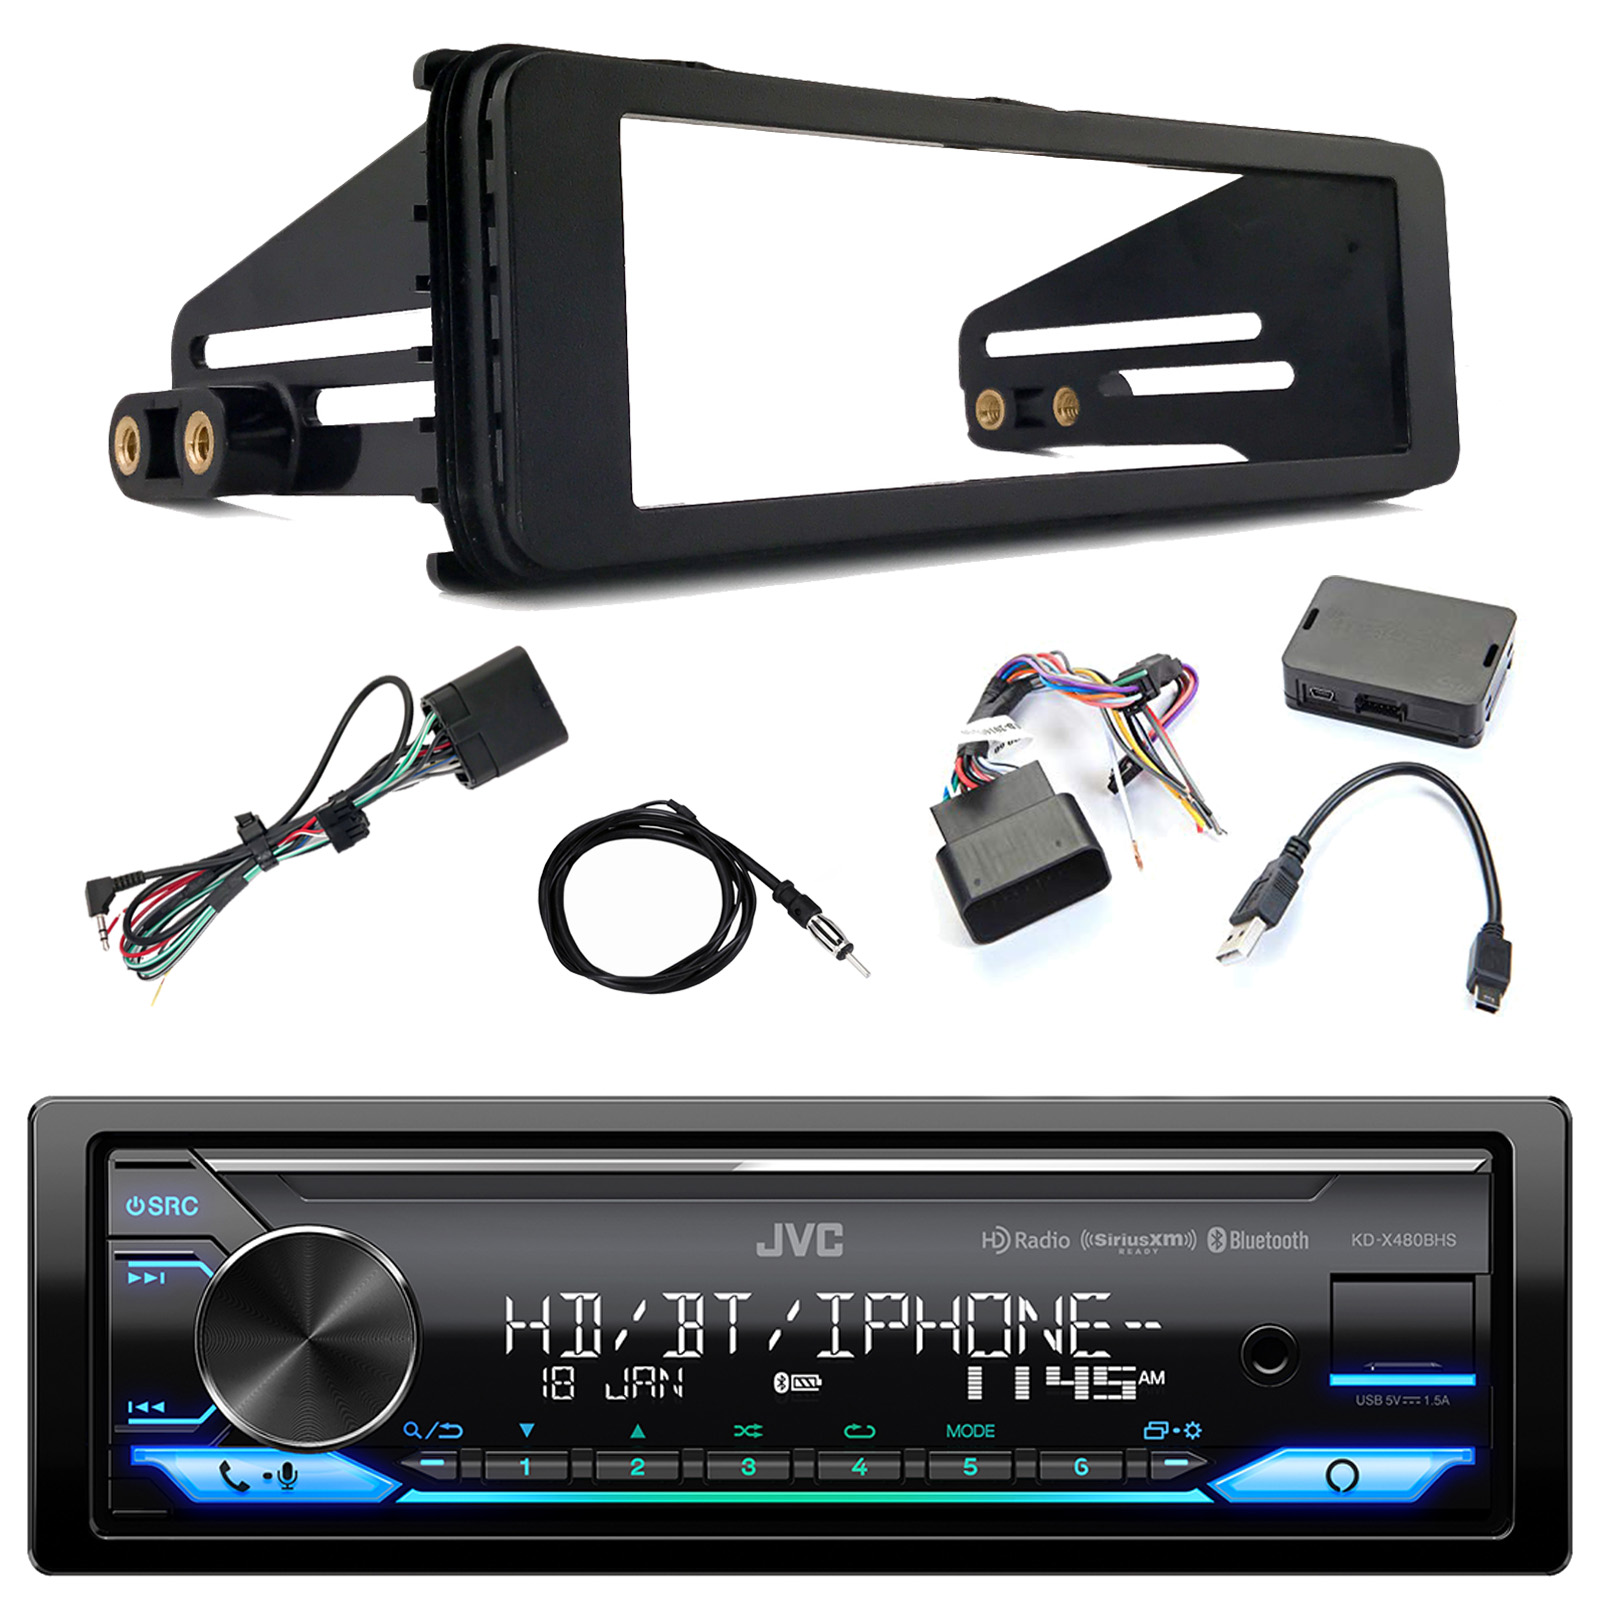 JVC KD-X480BHS Single DIN Bluetooth USB AUX LED Illumination AM/FM Radio  Stereo SiriusXM Ready Amazon Alexa LED Car Audio Receiver, iDataLink Harley  Wiring Interface Kit, Dash Kit, Radio Antenna